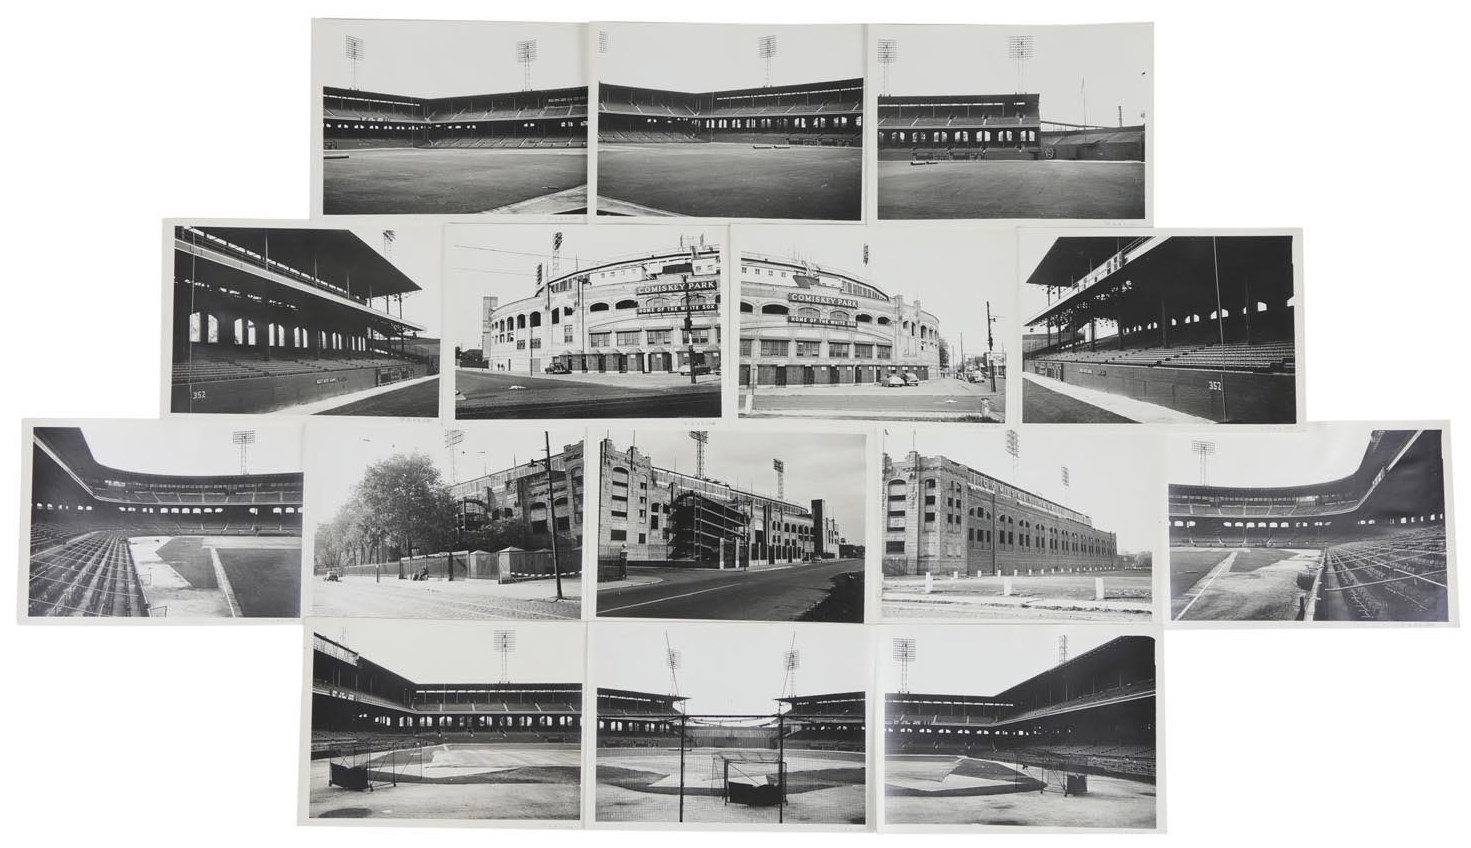 - 1949 Comiskey Park Vintage Stadium Photos (15)